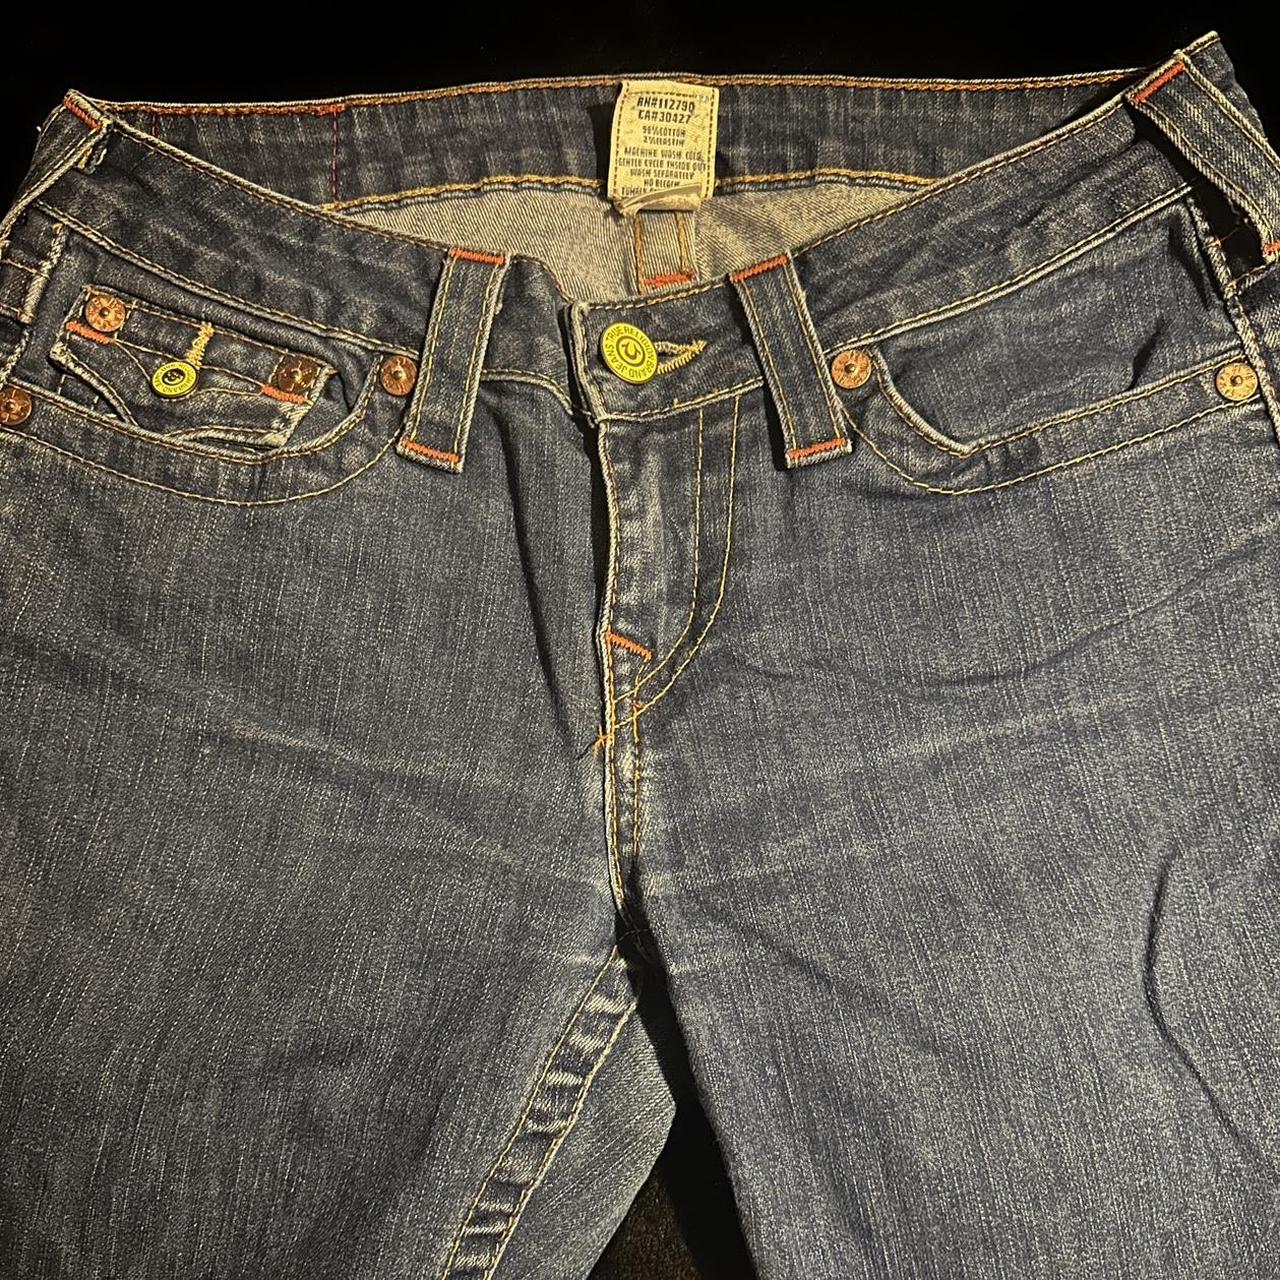 True religion BECKY jeans size 29 bootcut - Depop